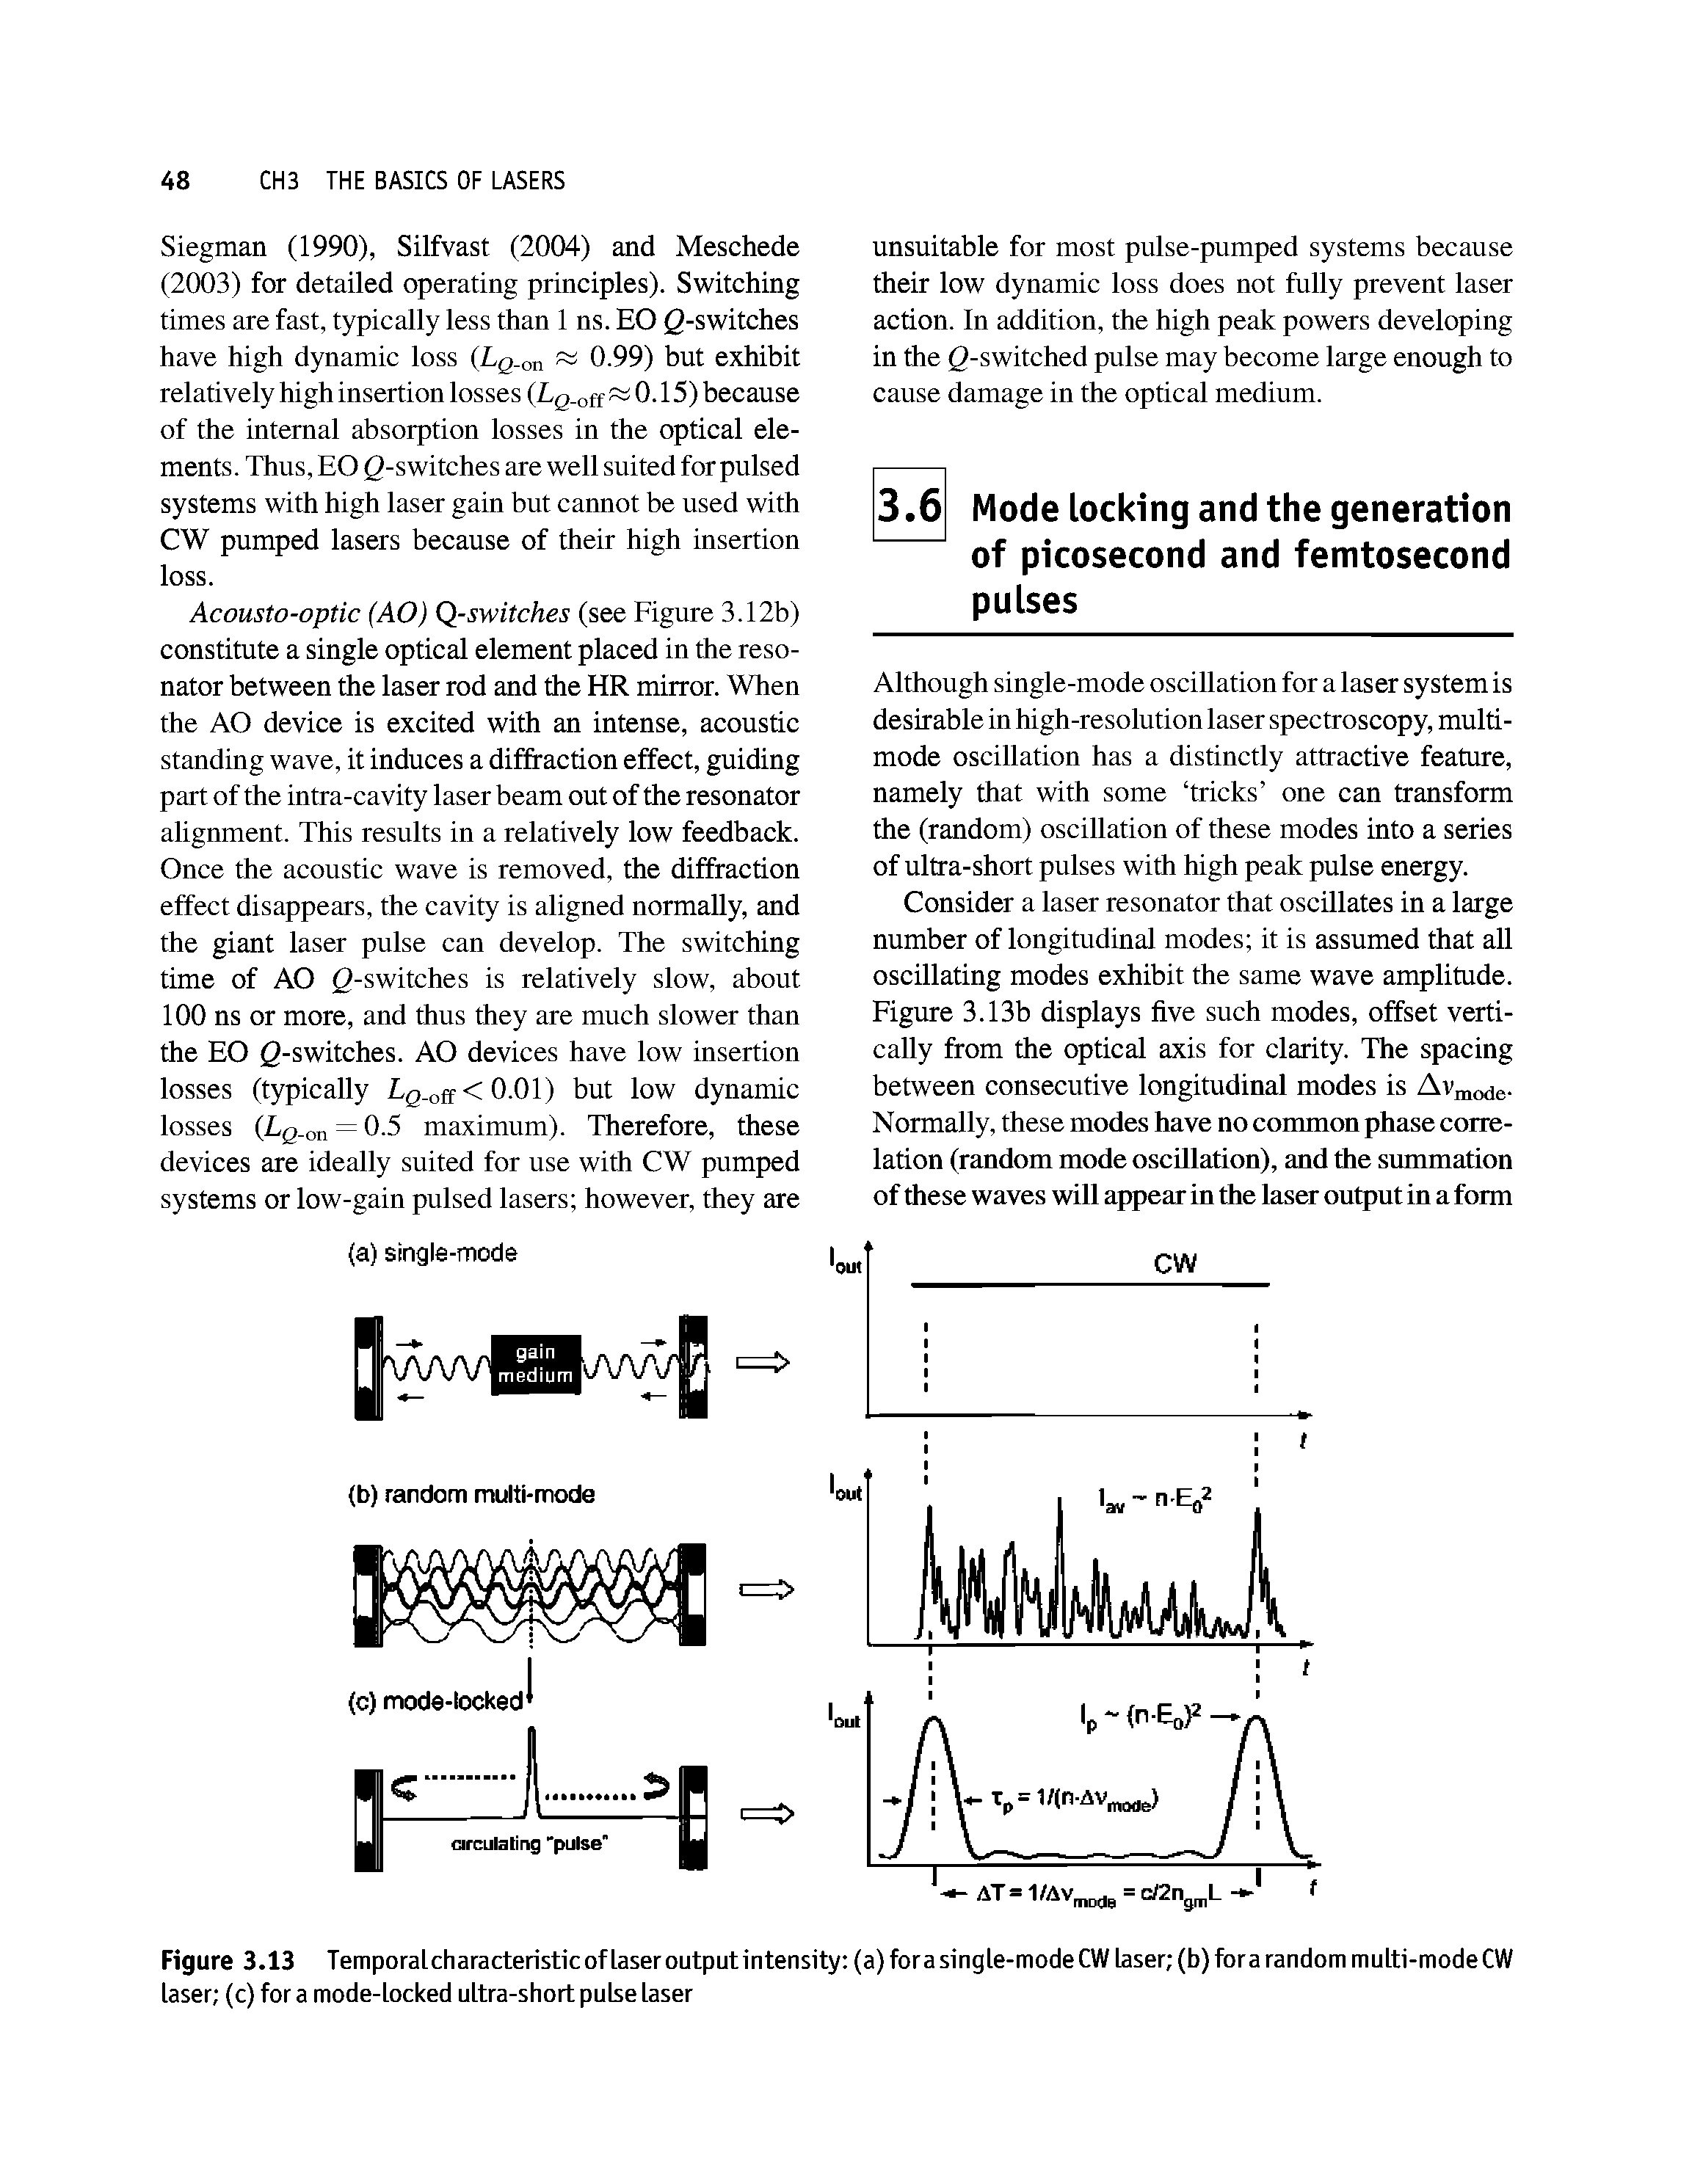 Figure 3.13 Temporalcharacteristic of laser output intensity (a) fora single-modeCW laser (b) fora random multi-modeCW laser (c) for a mode-locked ultra-short pulse laser...